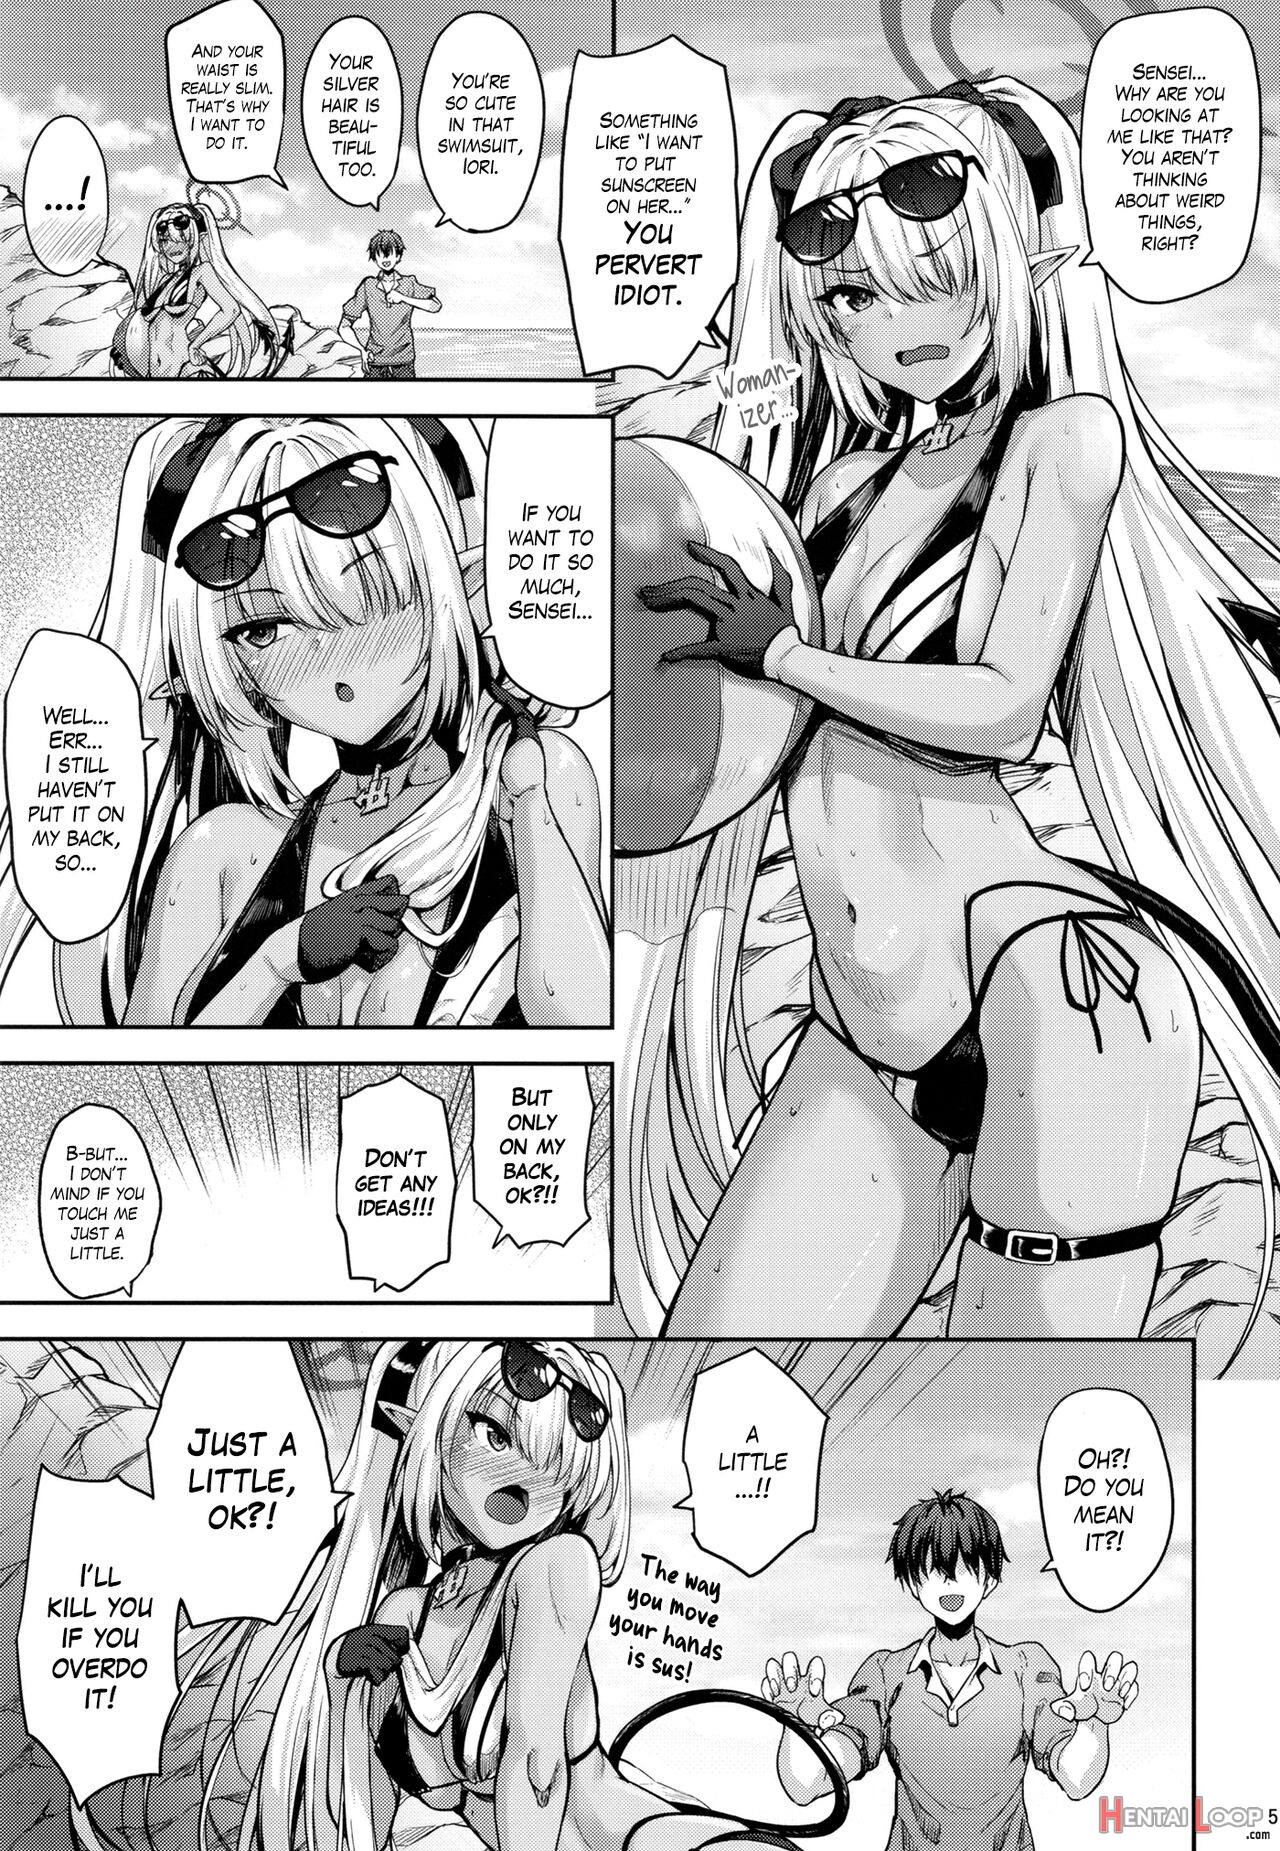 Sensei, You Pervert! page 4